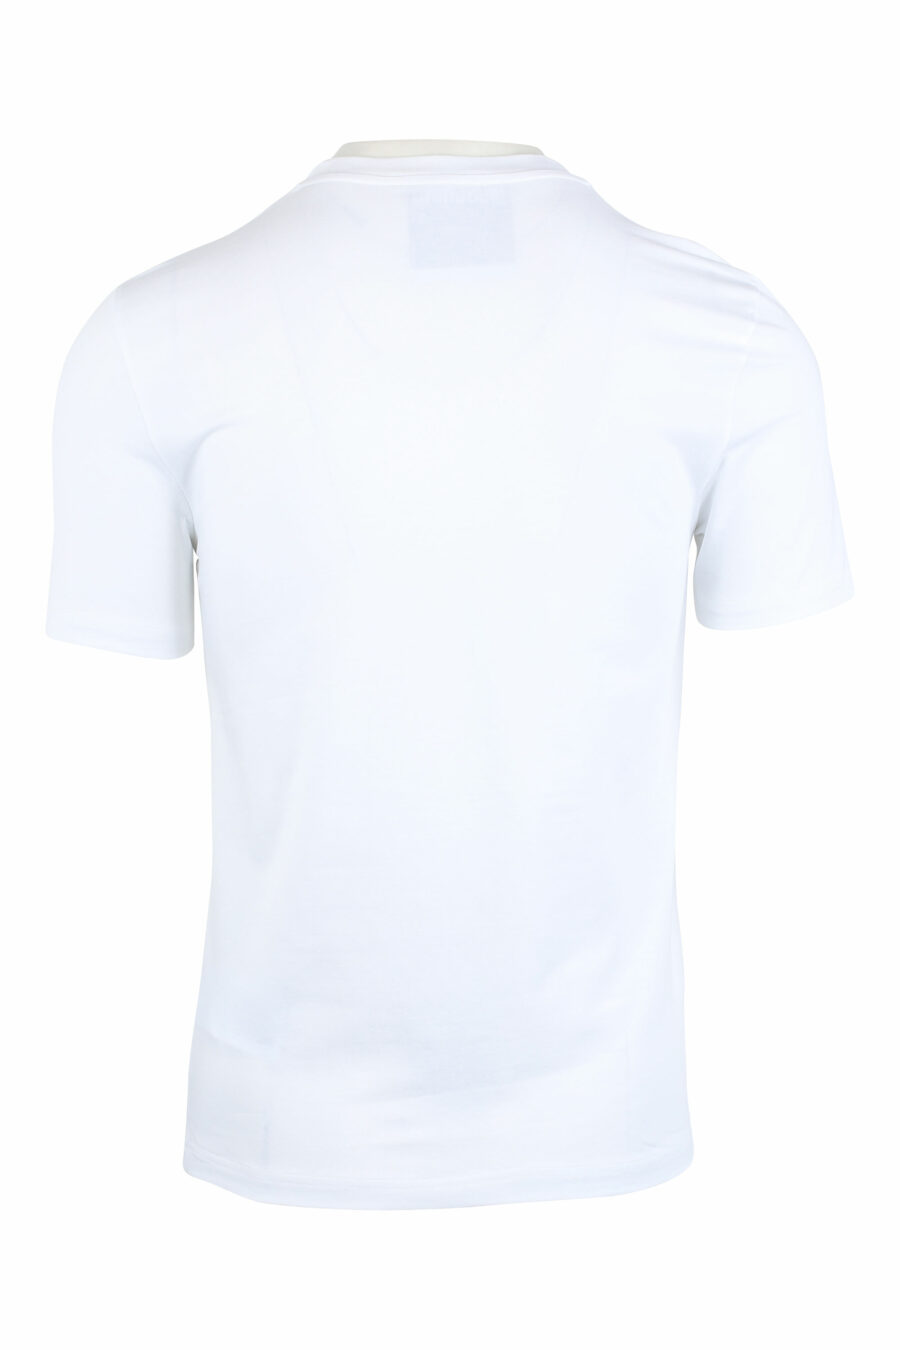 White T-shirt with "signature" logo - IMG 1354